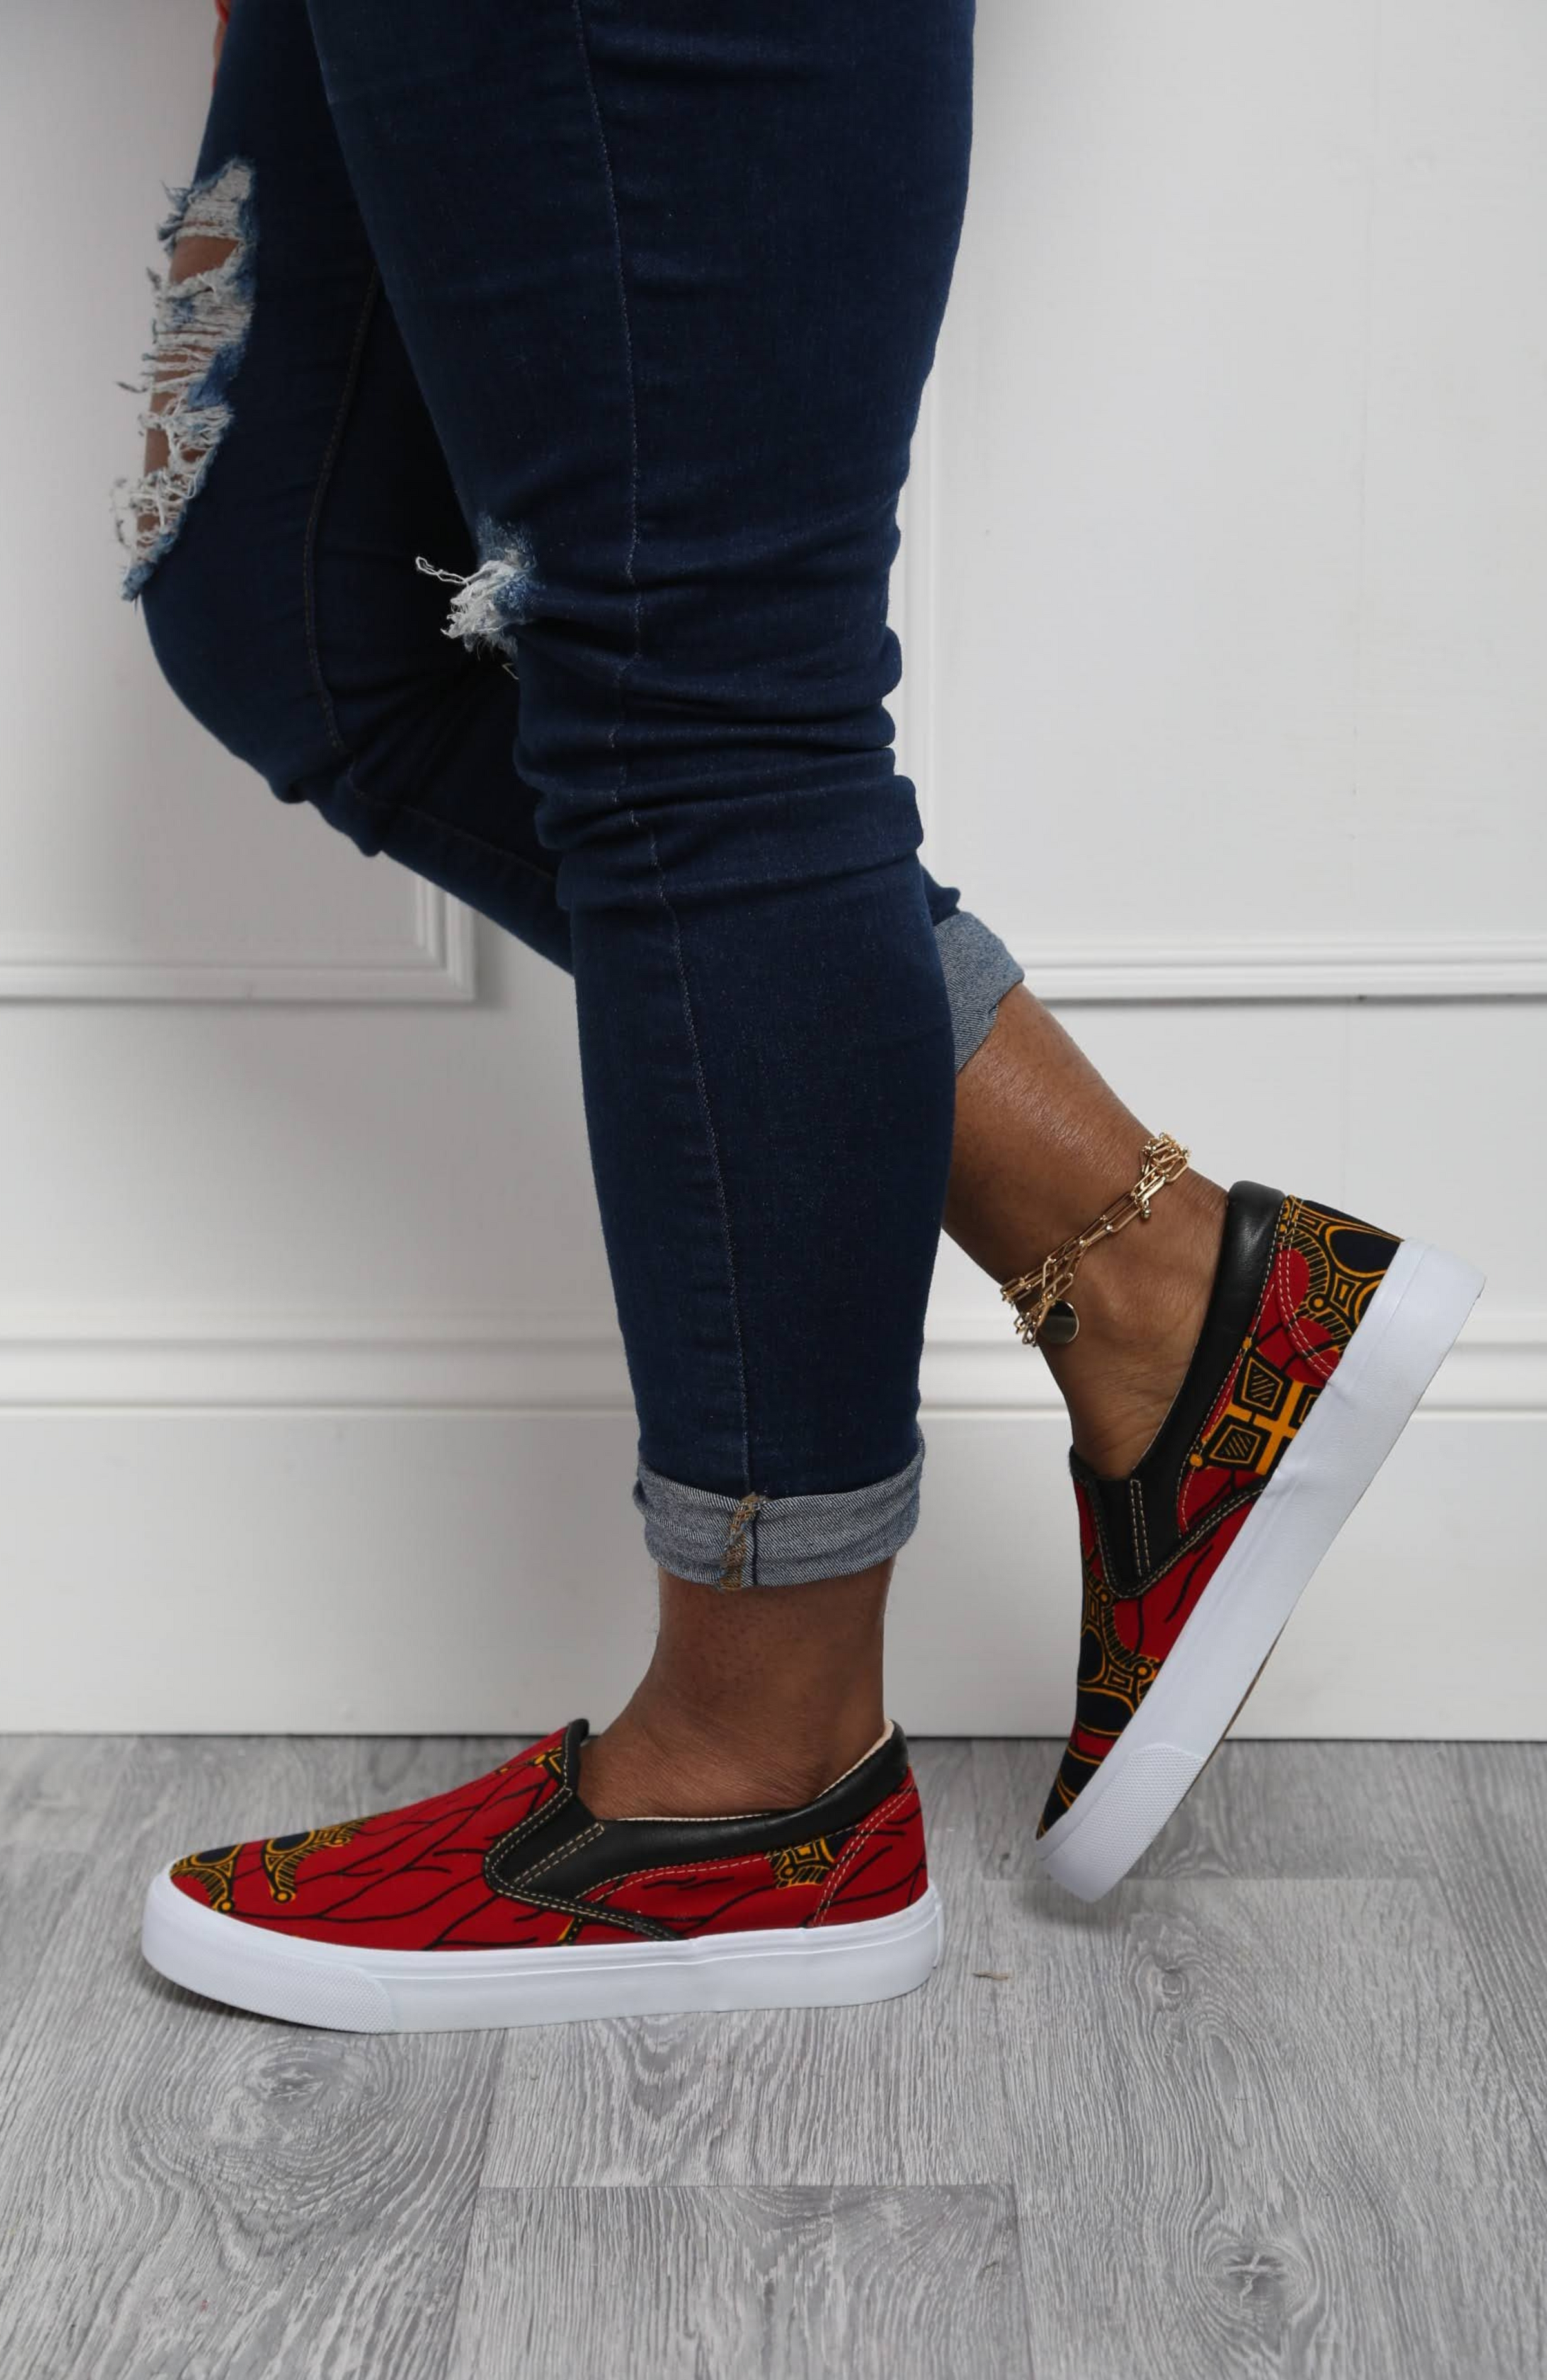 African Print Sneaker Shoes Light Weight Slip-on Trainer - KUMASI